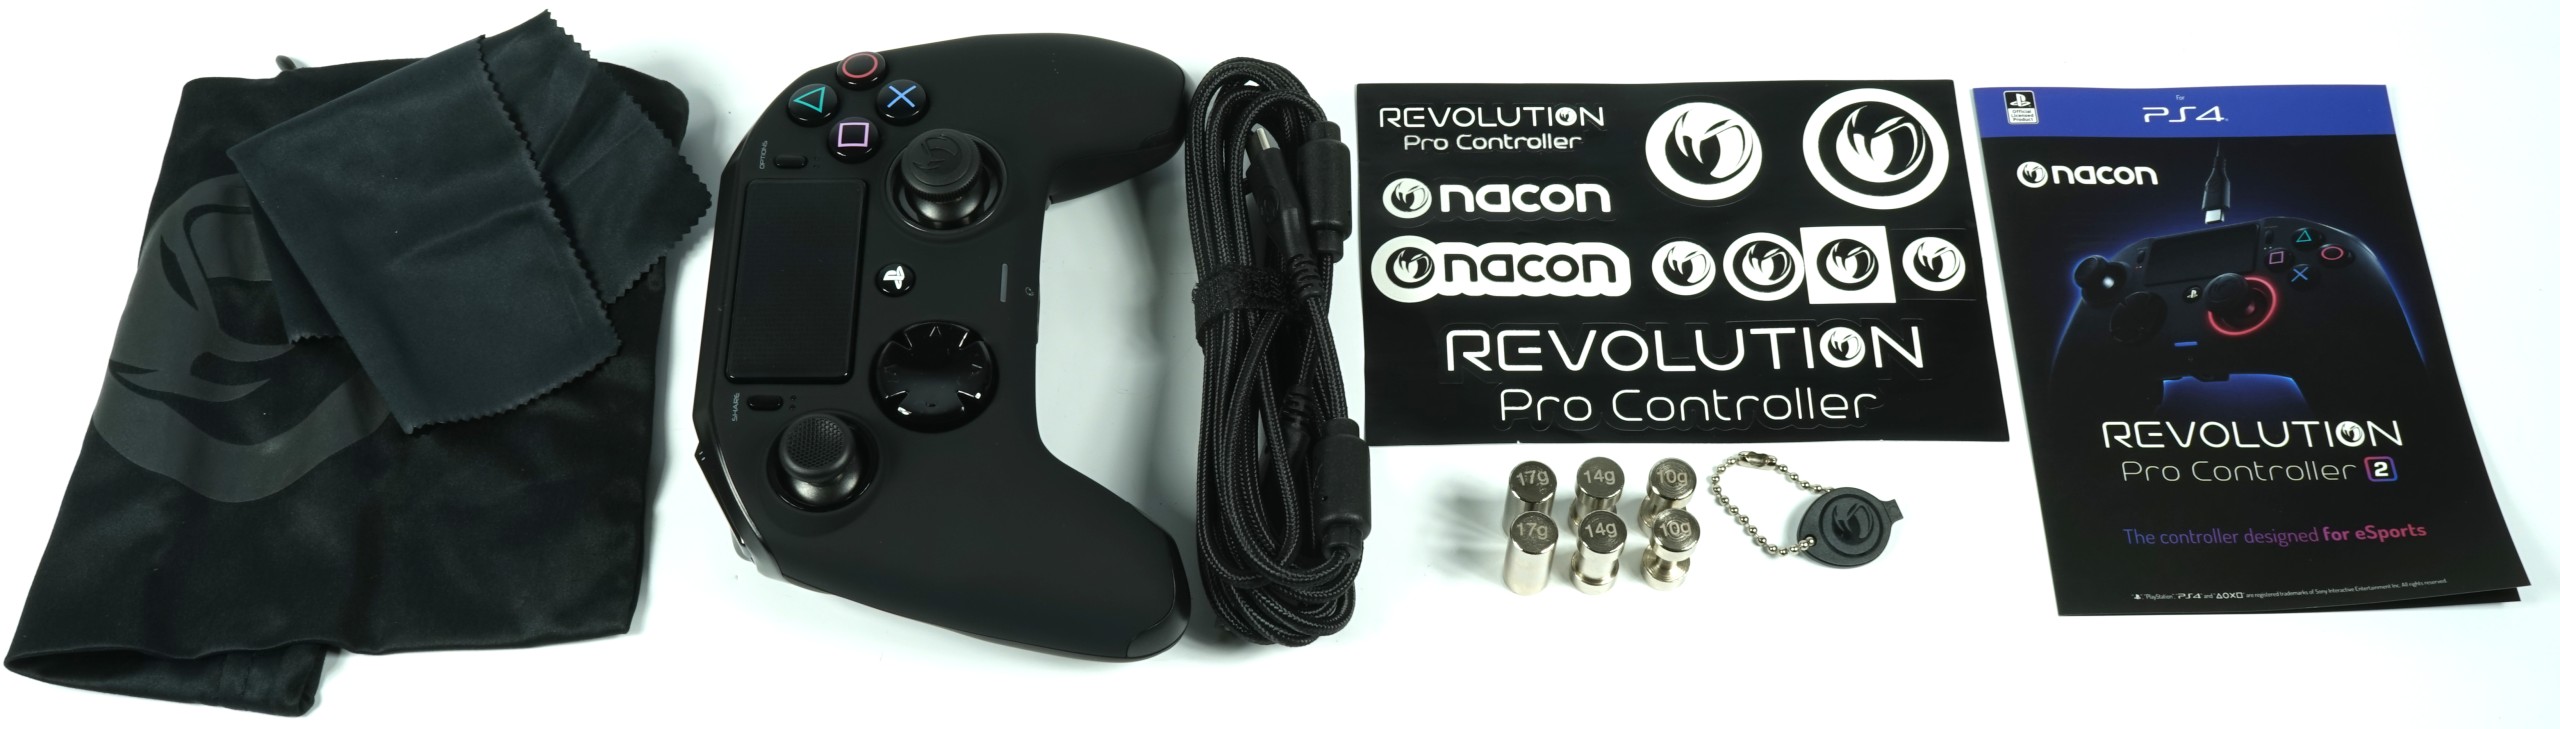 nacon revolution pro 2 reddit